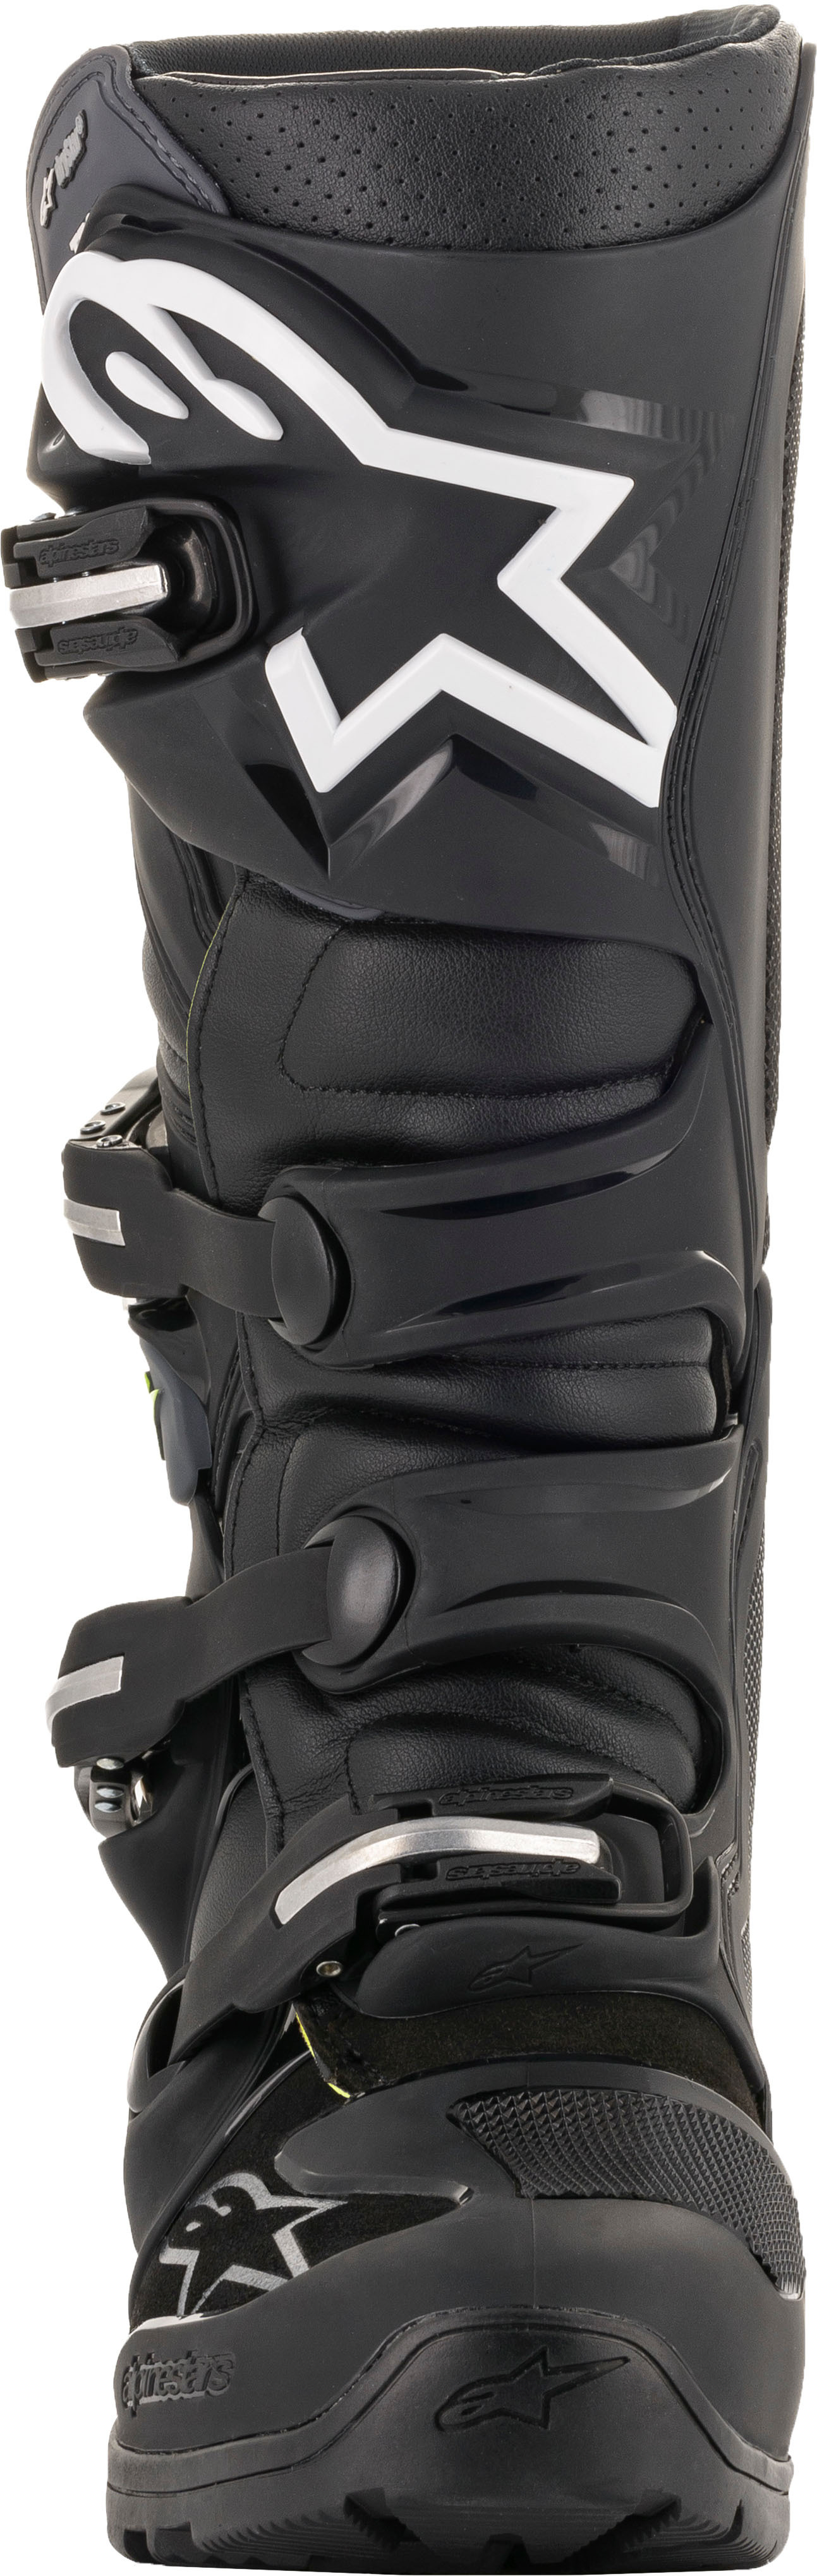 Tech 7 Enduro Drystar Boots Black/Grey US 10 - Click Image to Close